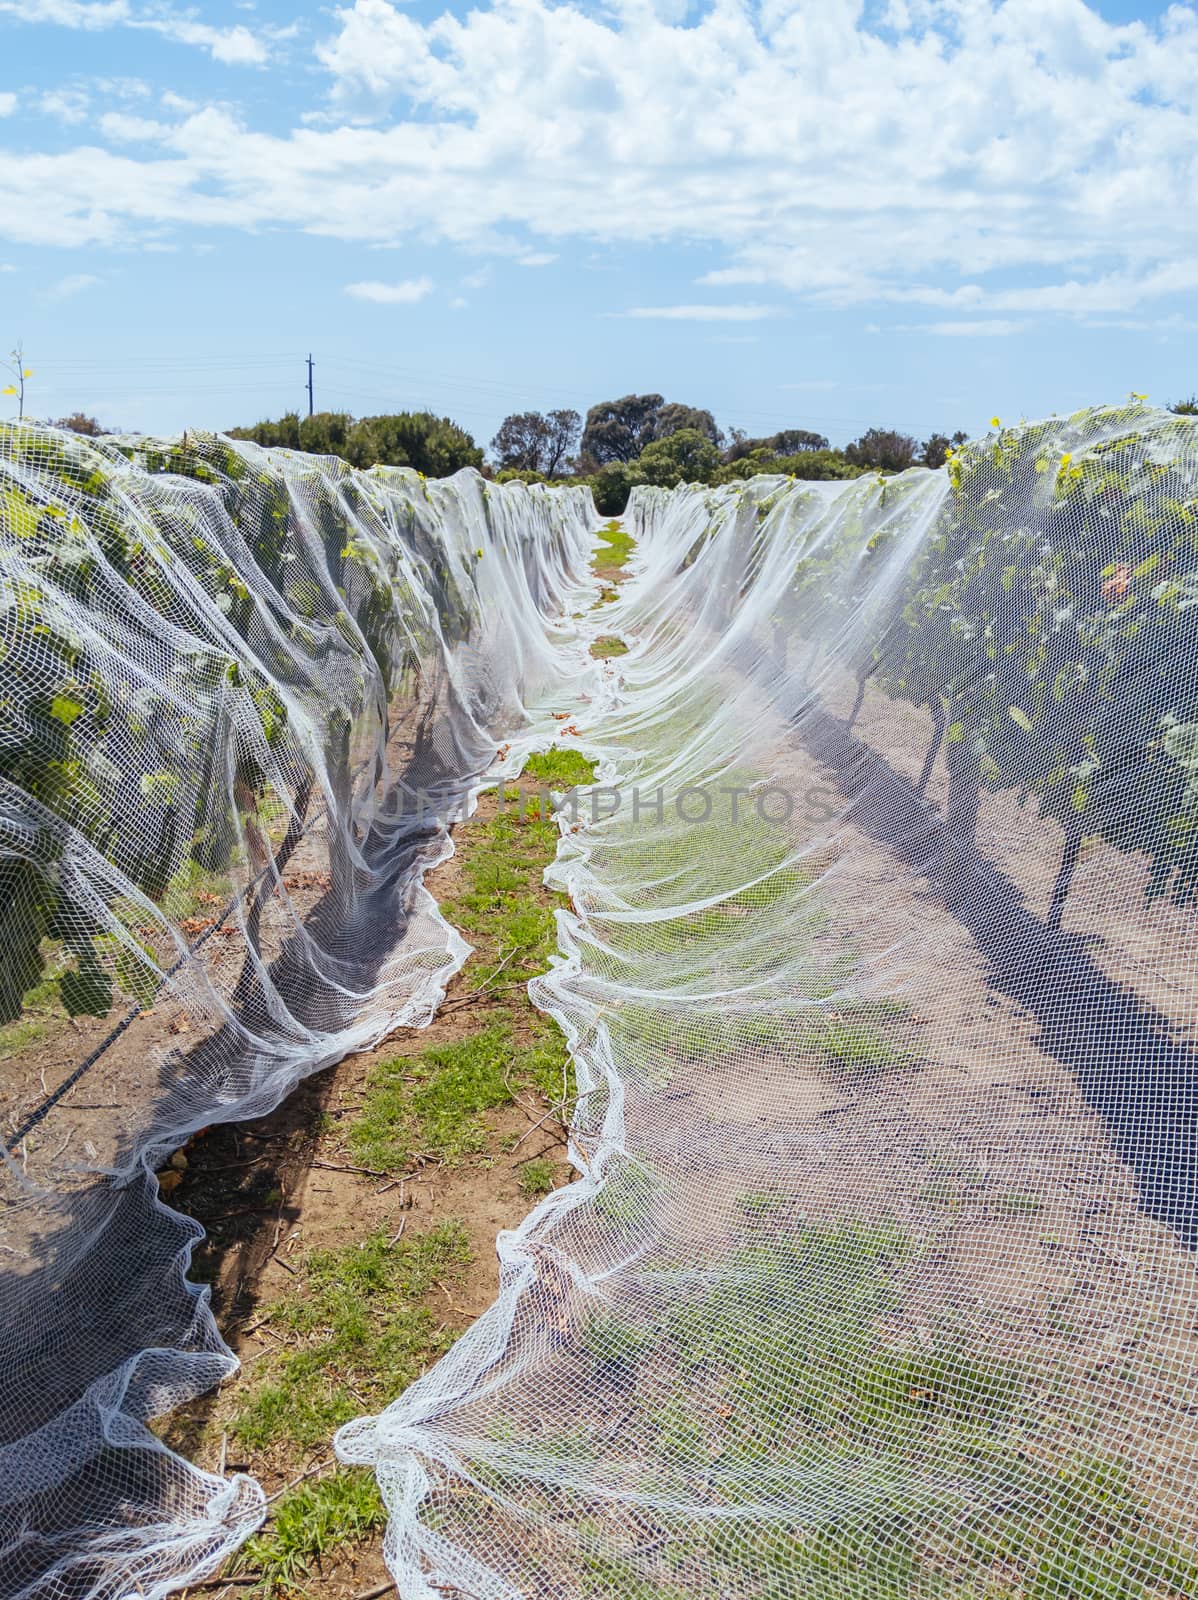 Vines on Mornington Peninsula in Australia by FiledIMAGE